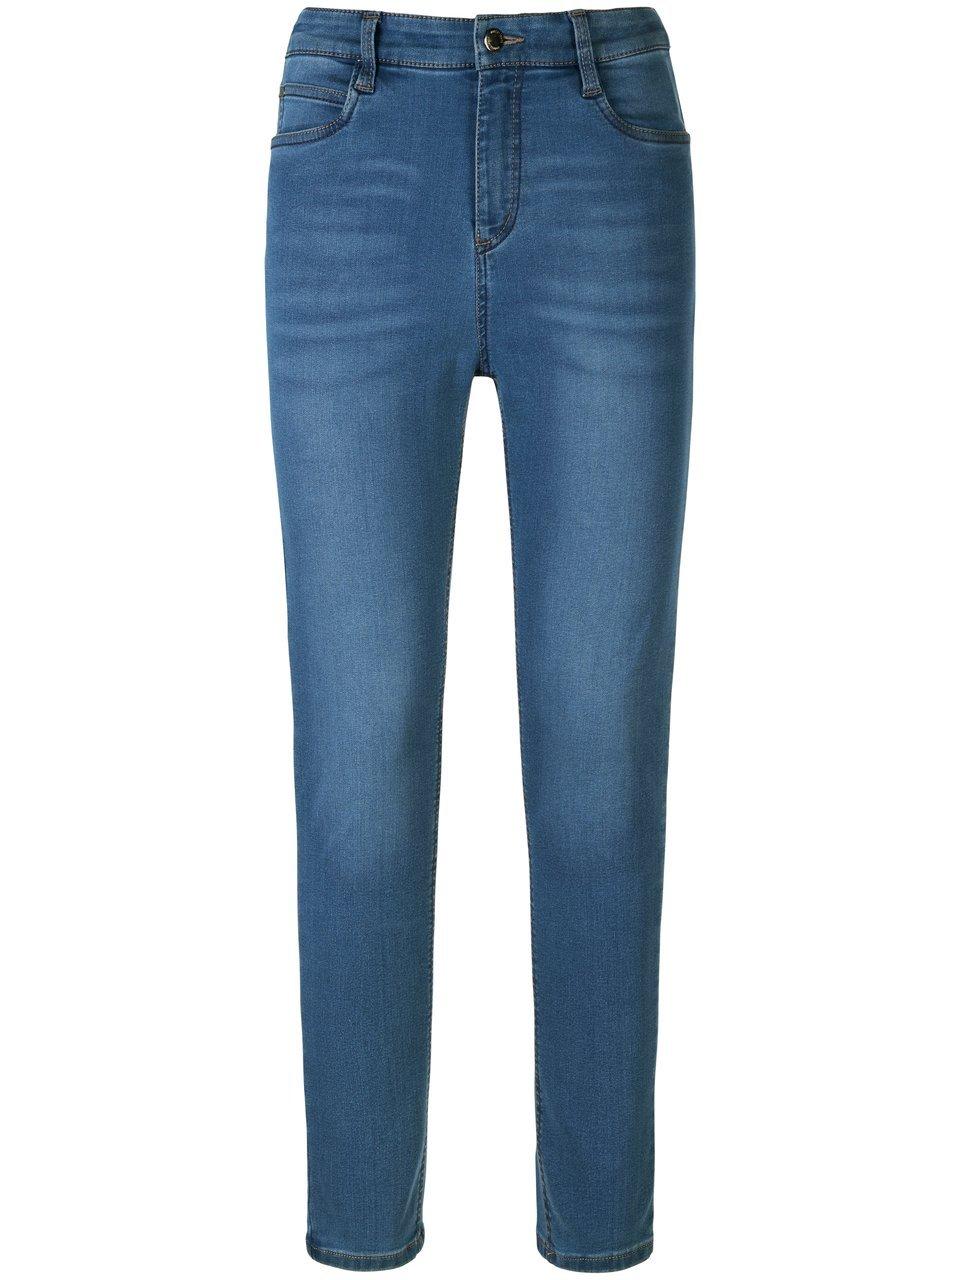 Extra smalle high Waist skinny jeans Van Wonderjeans denim